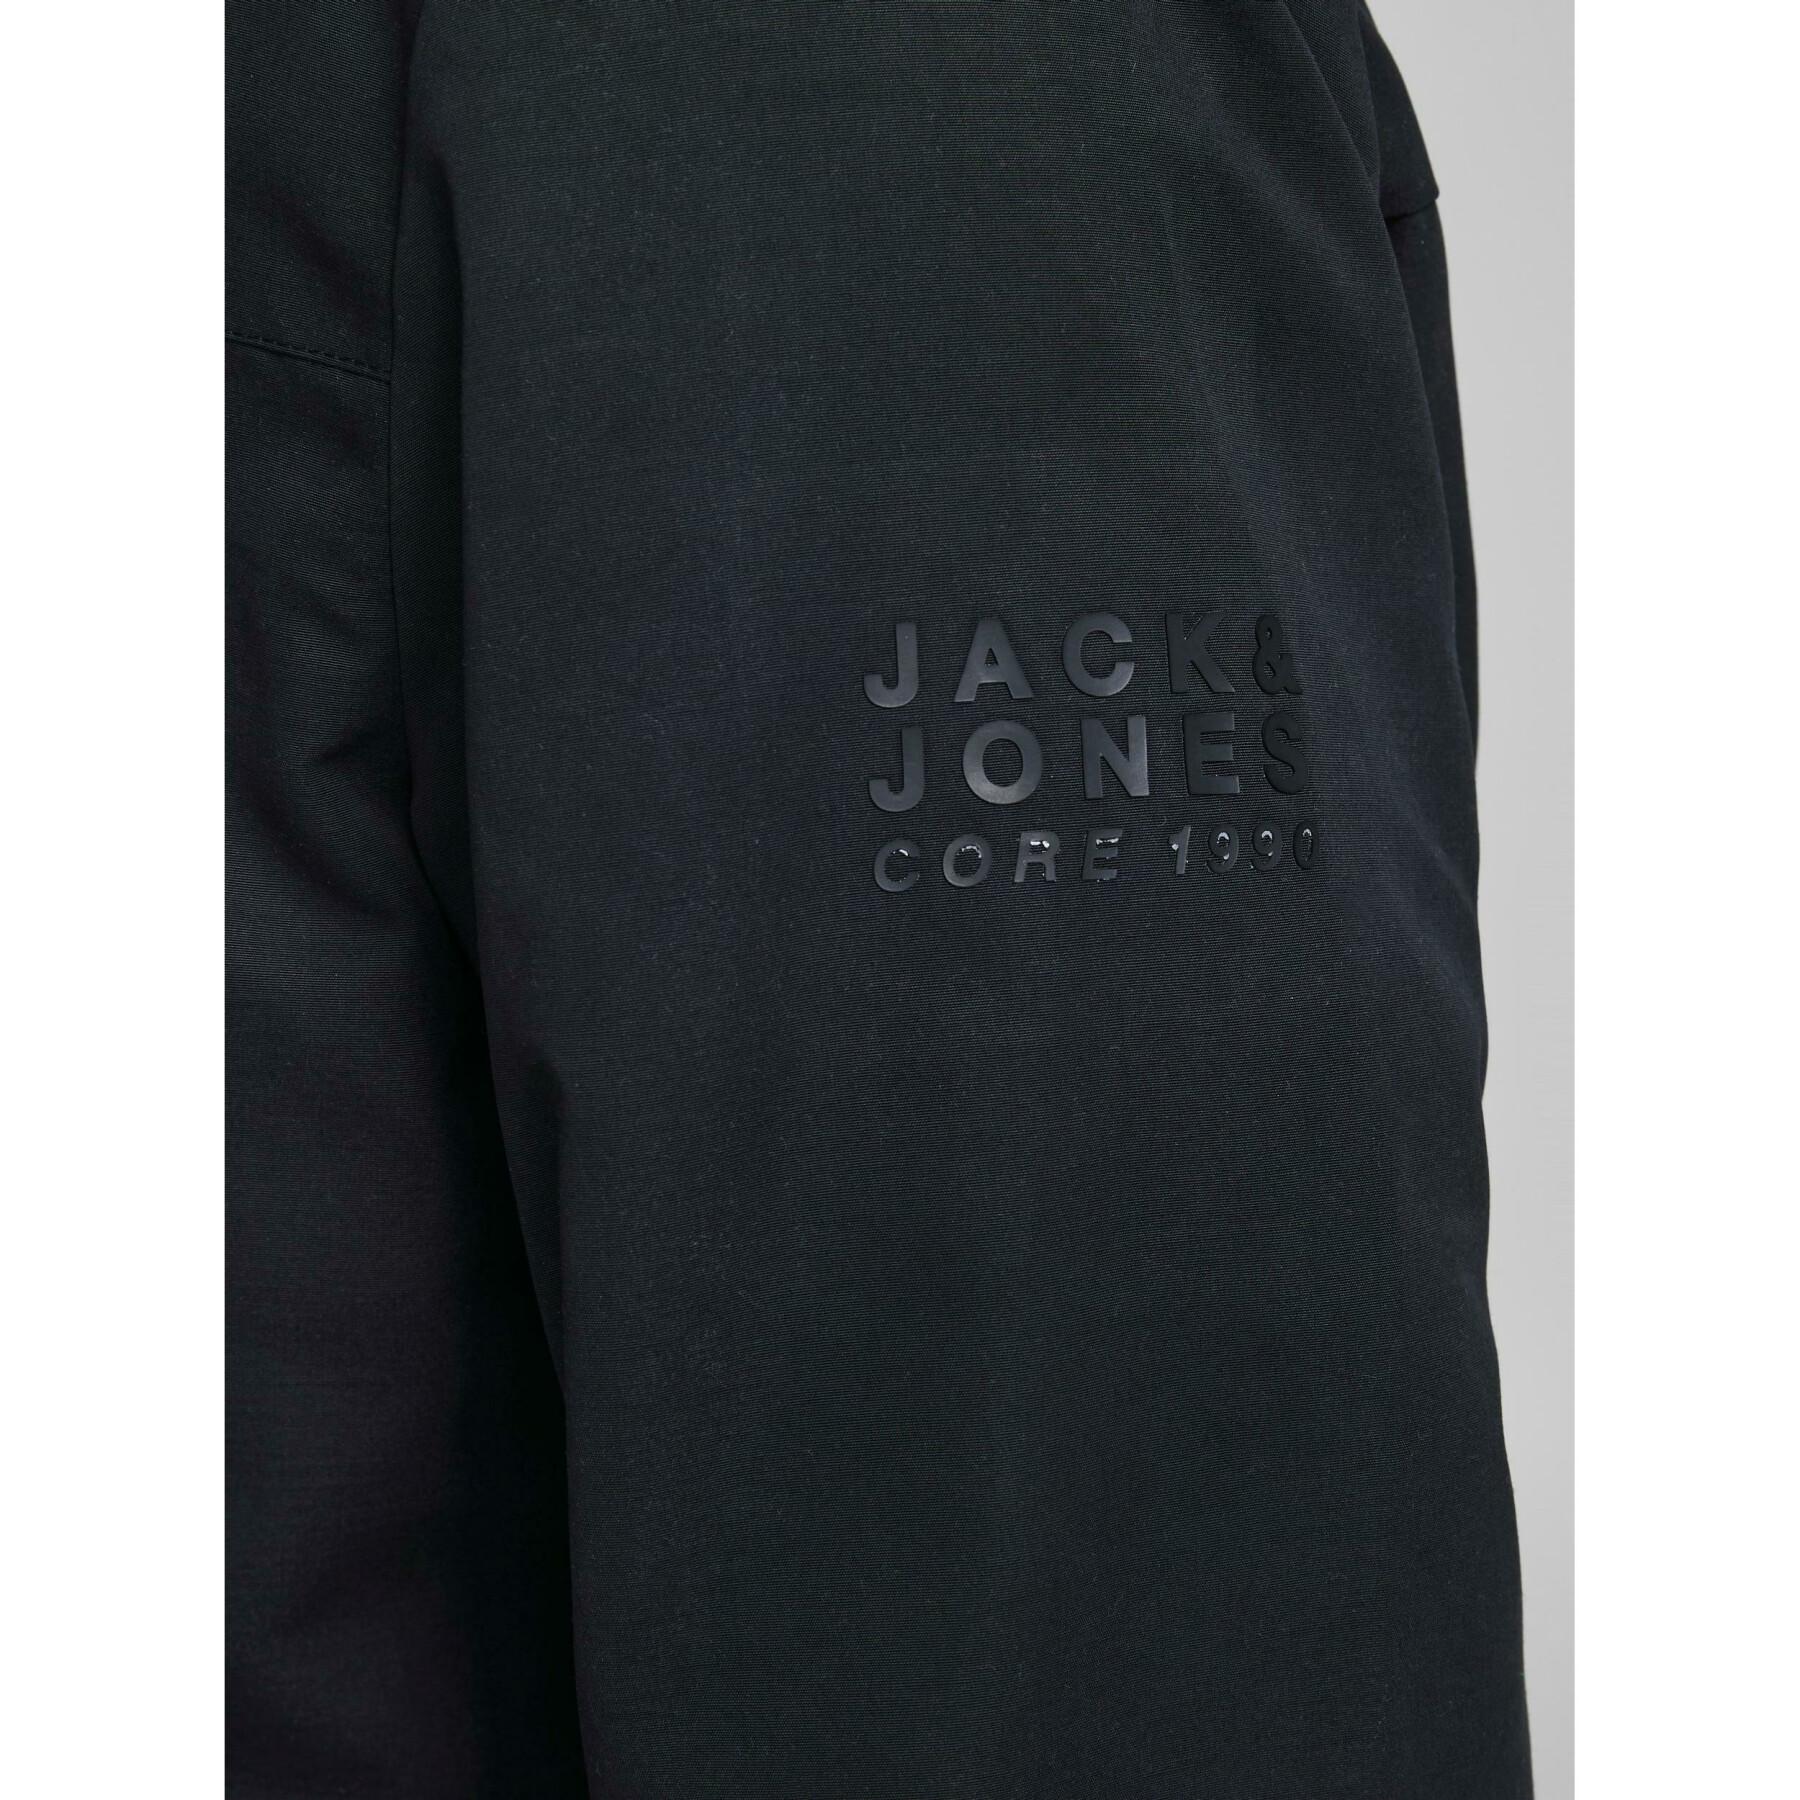 Jacket Jack & Jones Coalu Peach